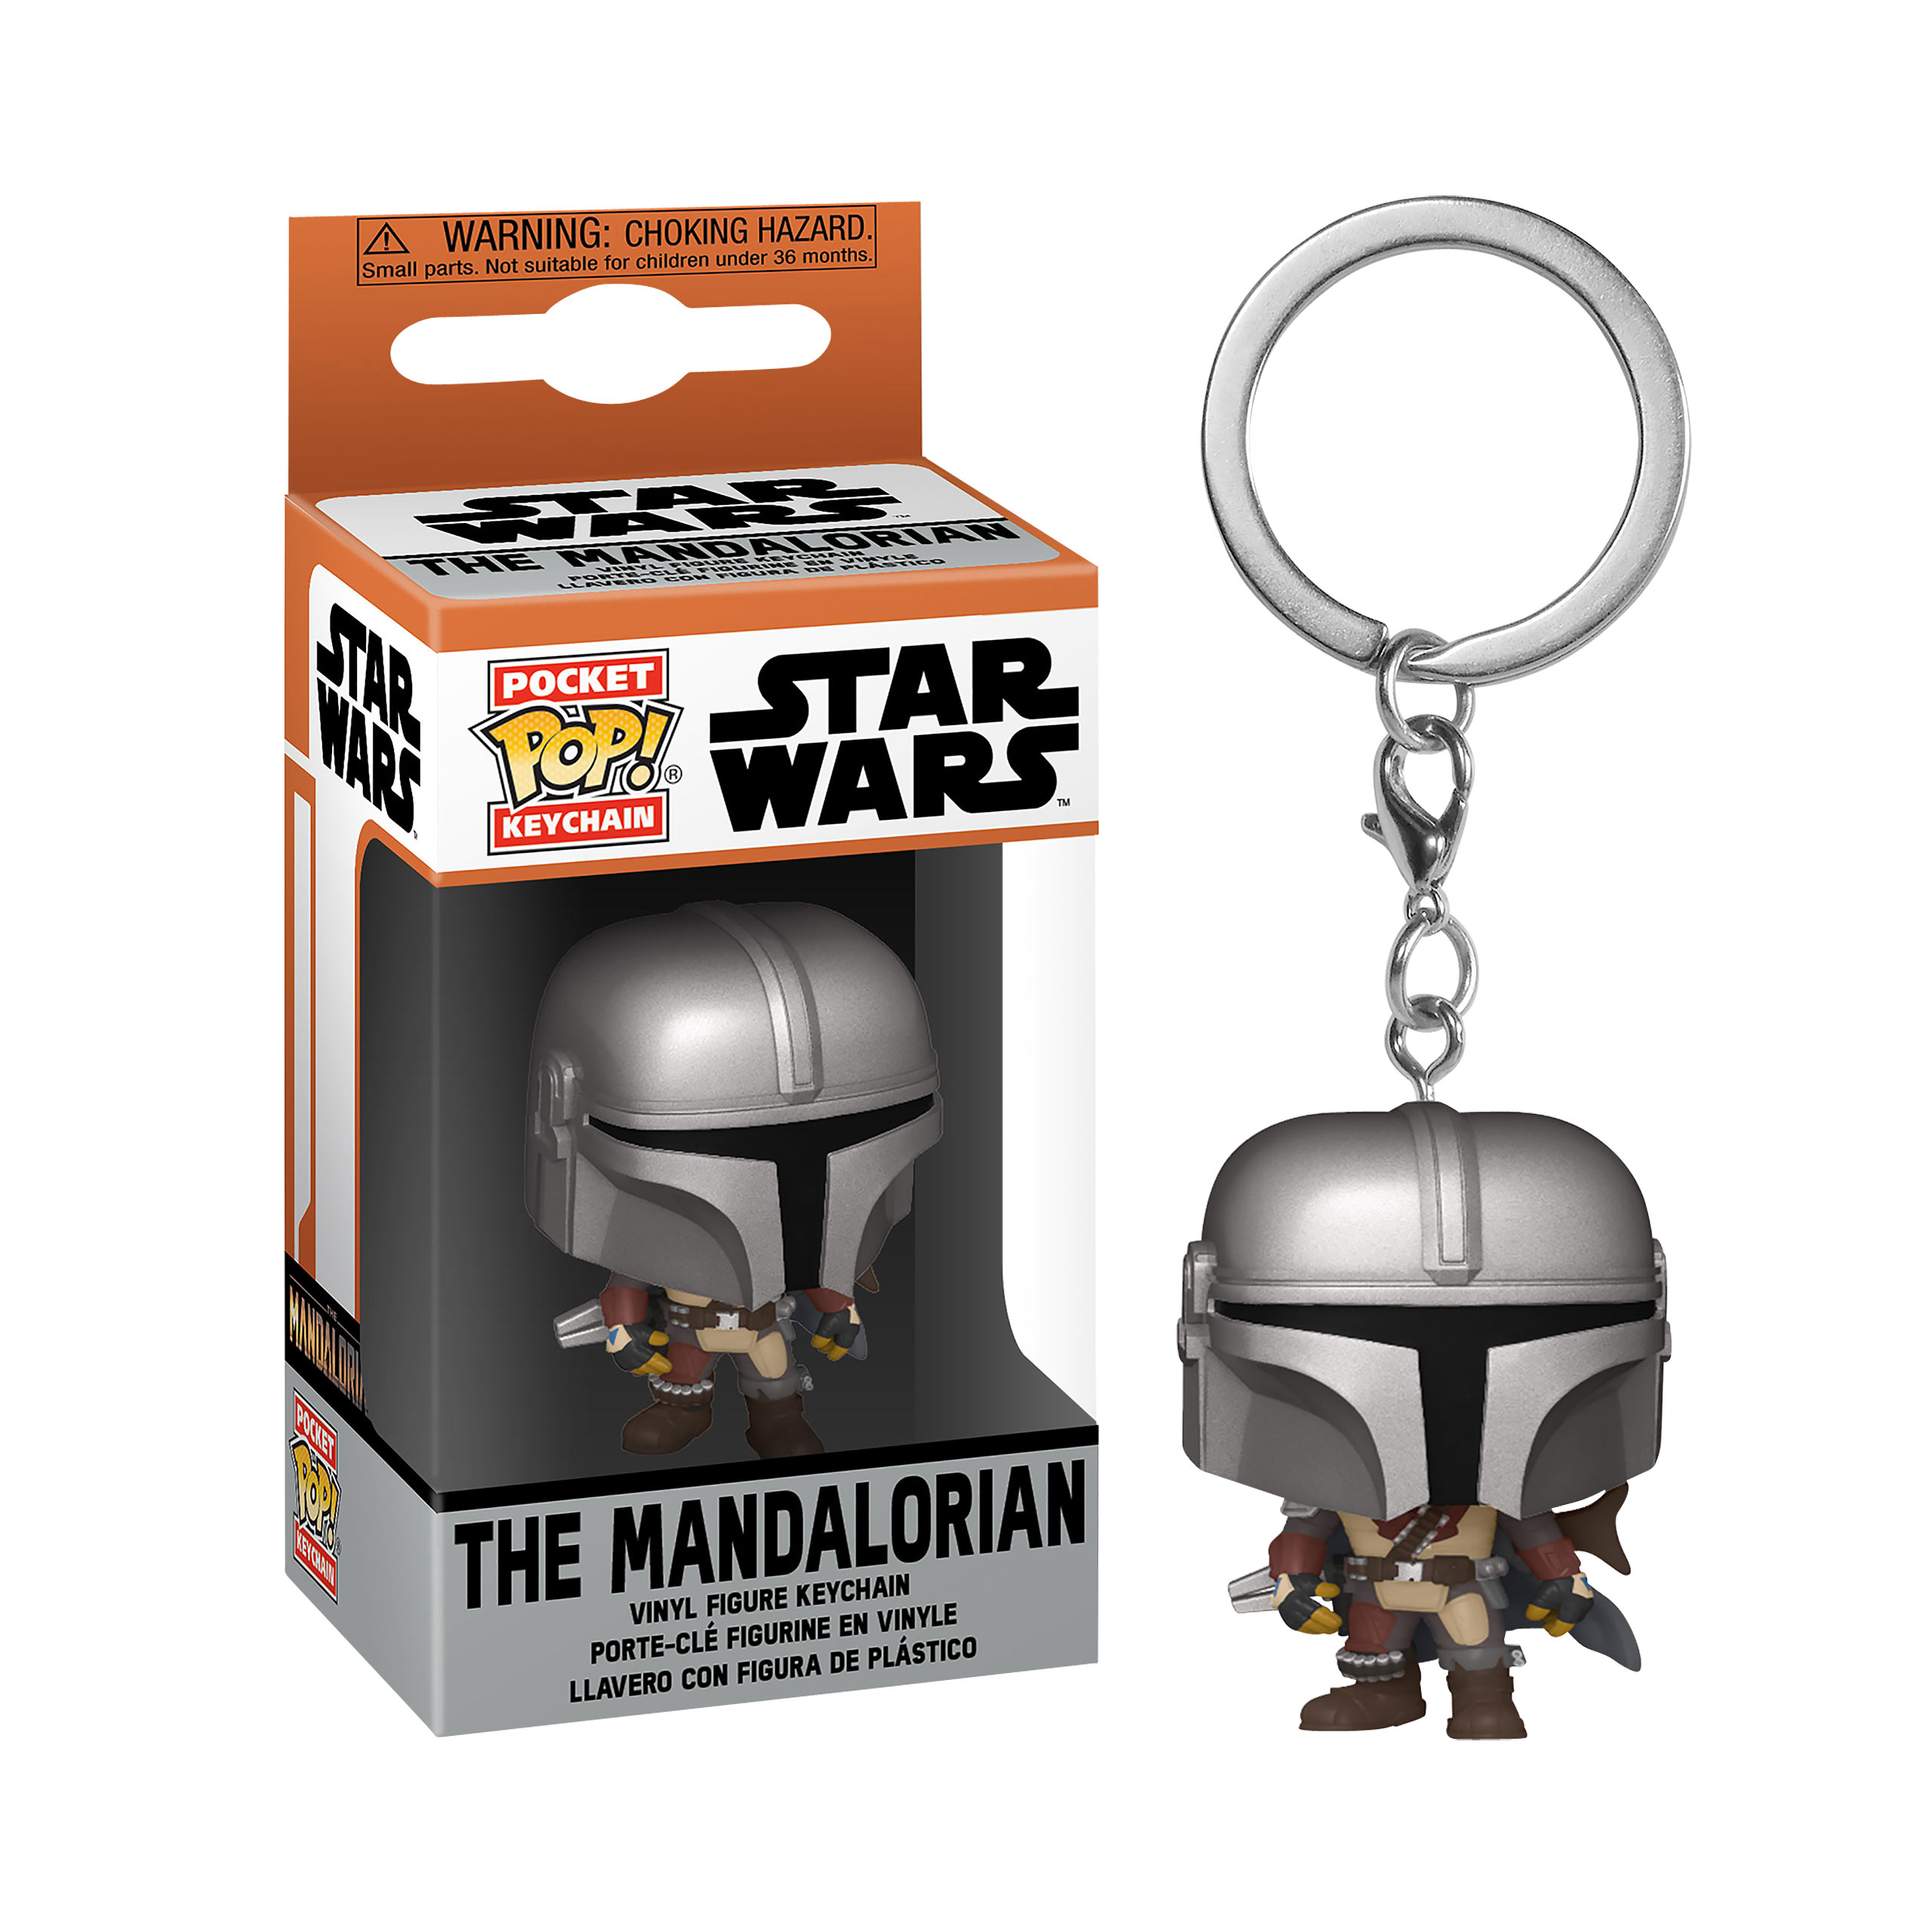 The Mandalorian Funko Pop Keychain - Star Wars